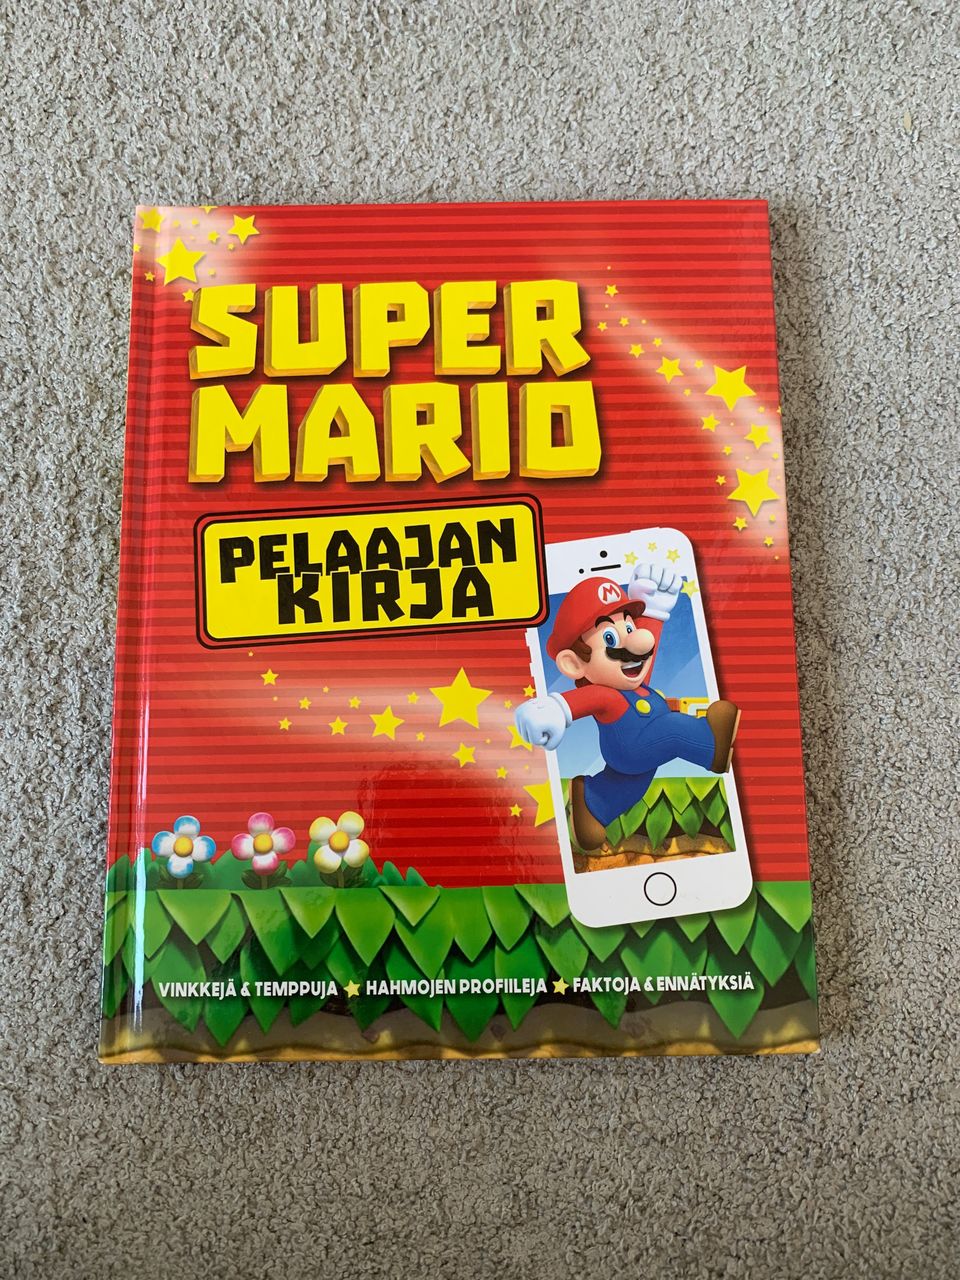 Super Mario pelaajan kirja